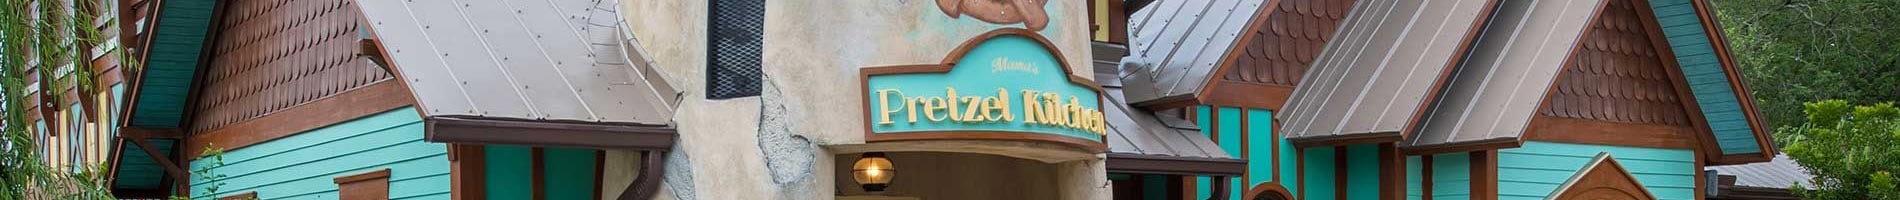 Mamas Pretzel Kitchen at SeaWorld Orlando